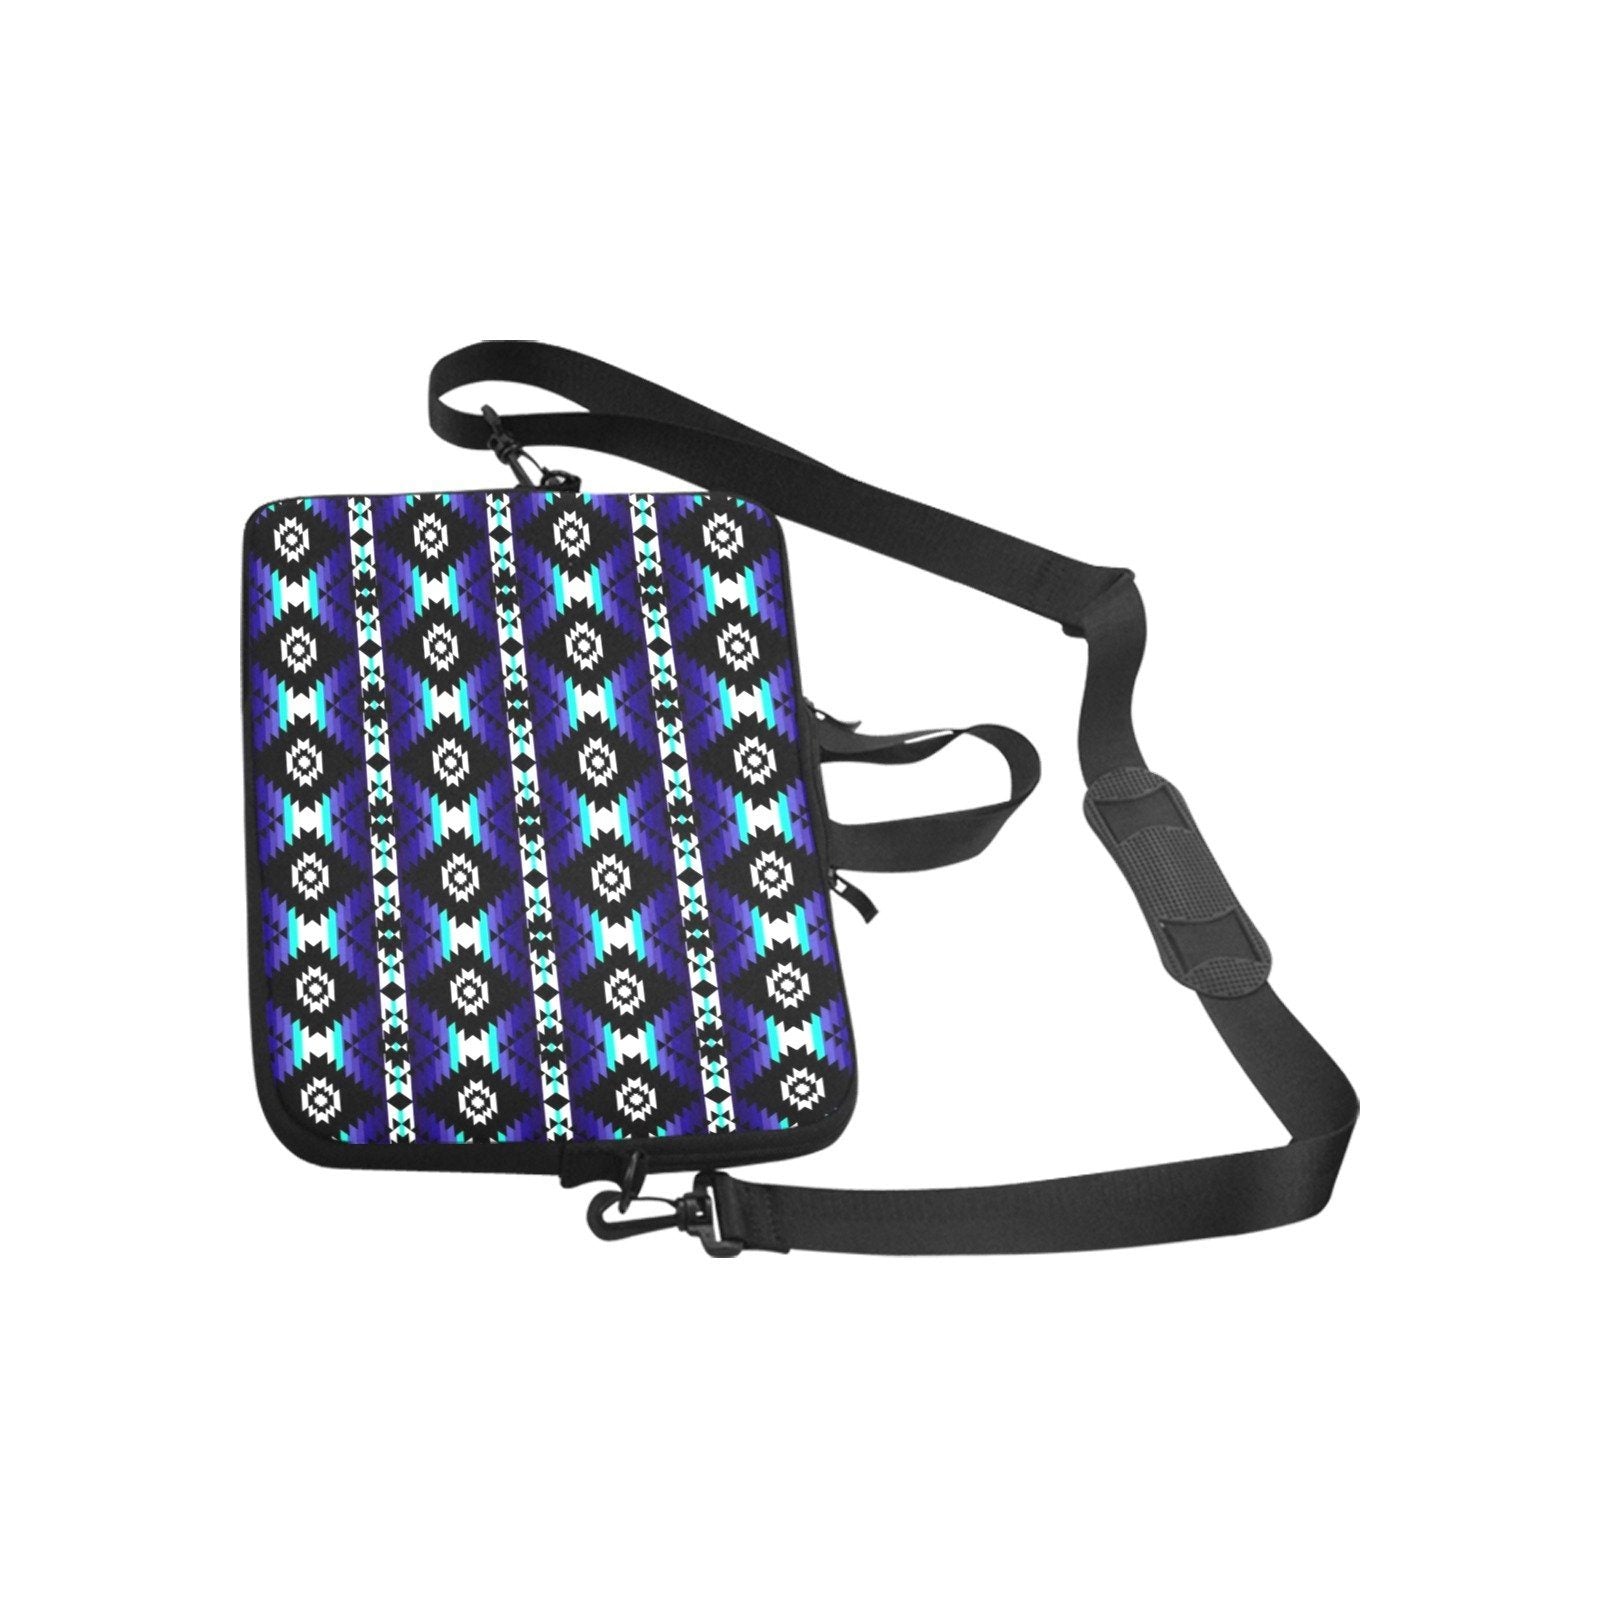 Cree Confederacy Midnight Laptop Handbags 13" Laptop Handbags 13" e-joyer 